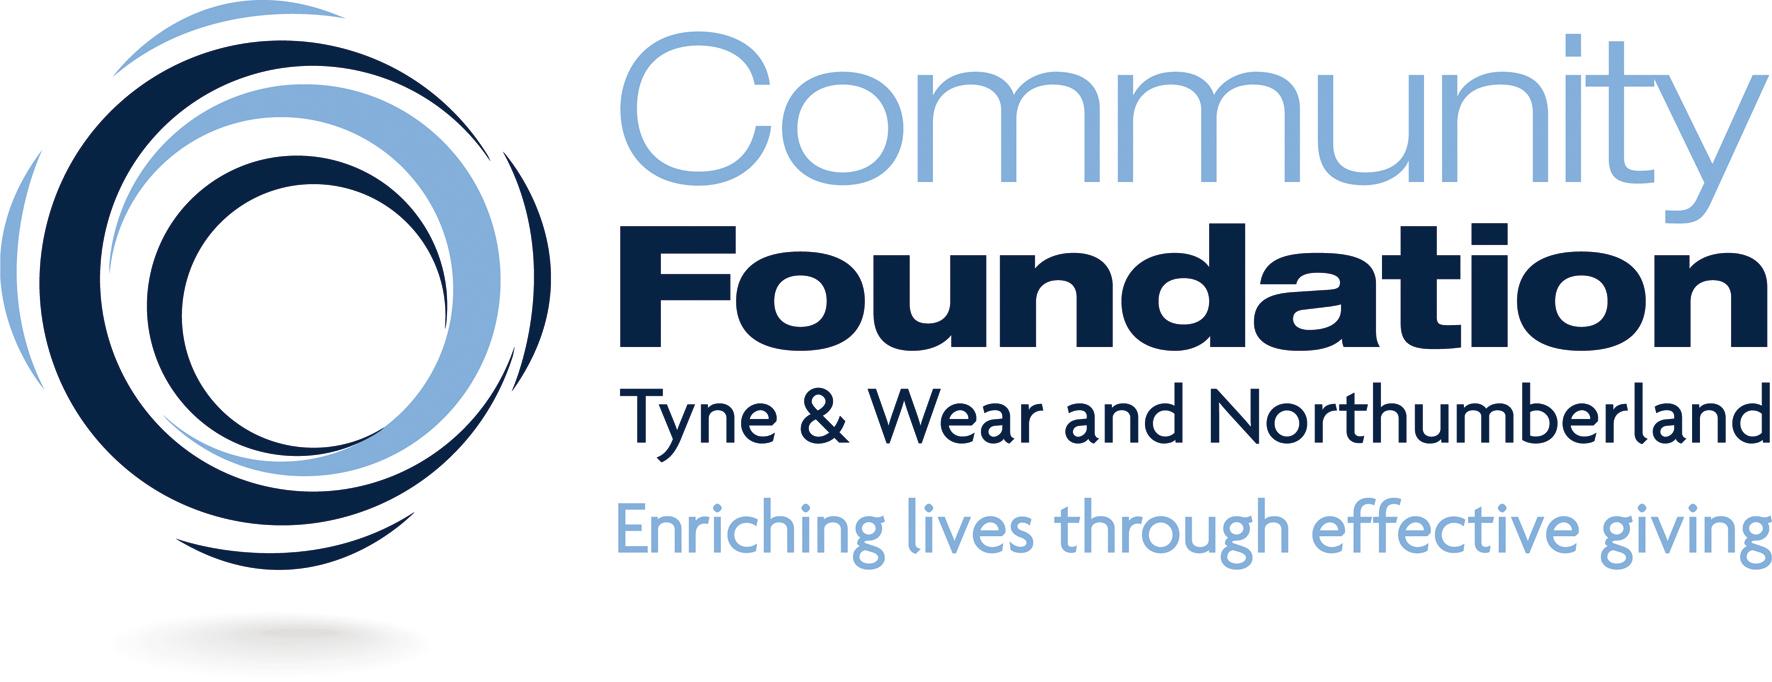 Community Foundation serving Tyne & Wear and Northumberland's Logo